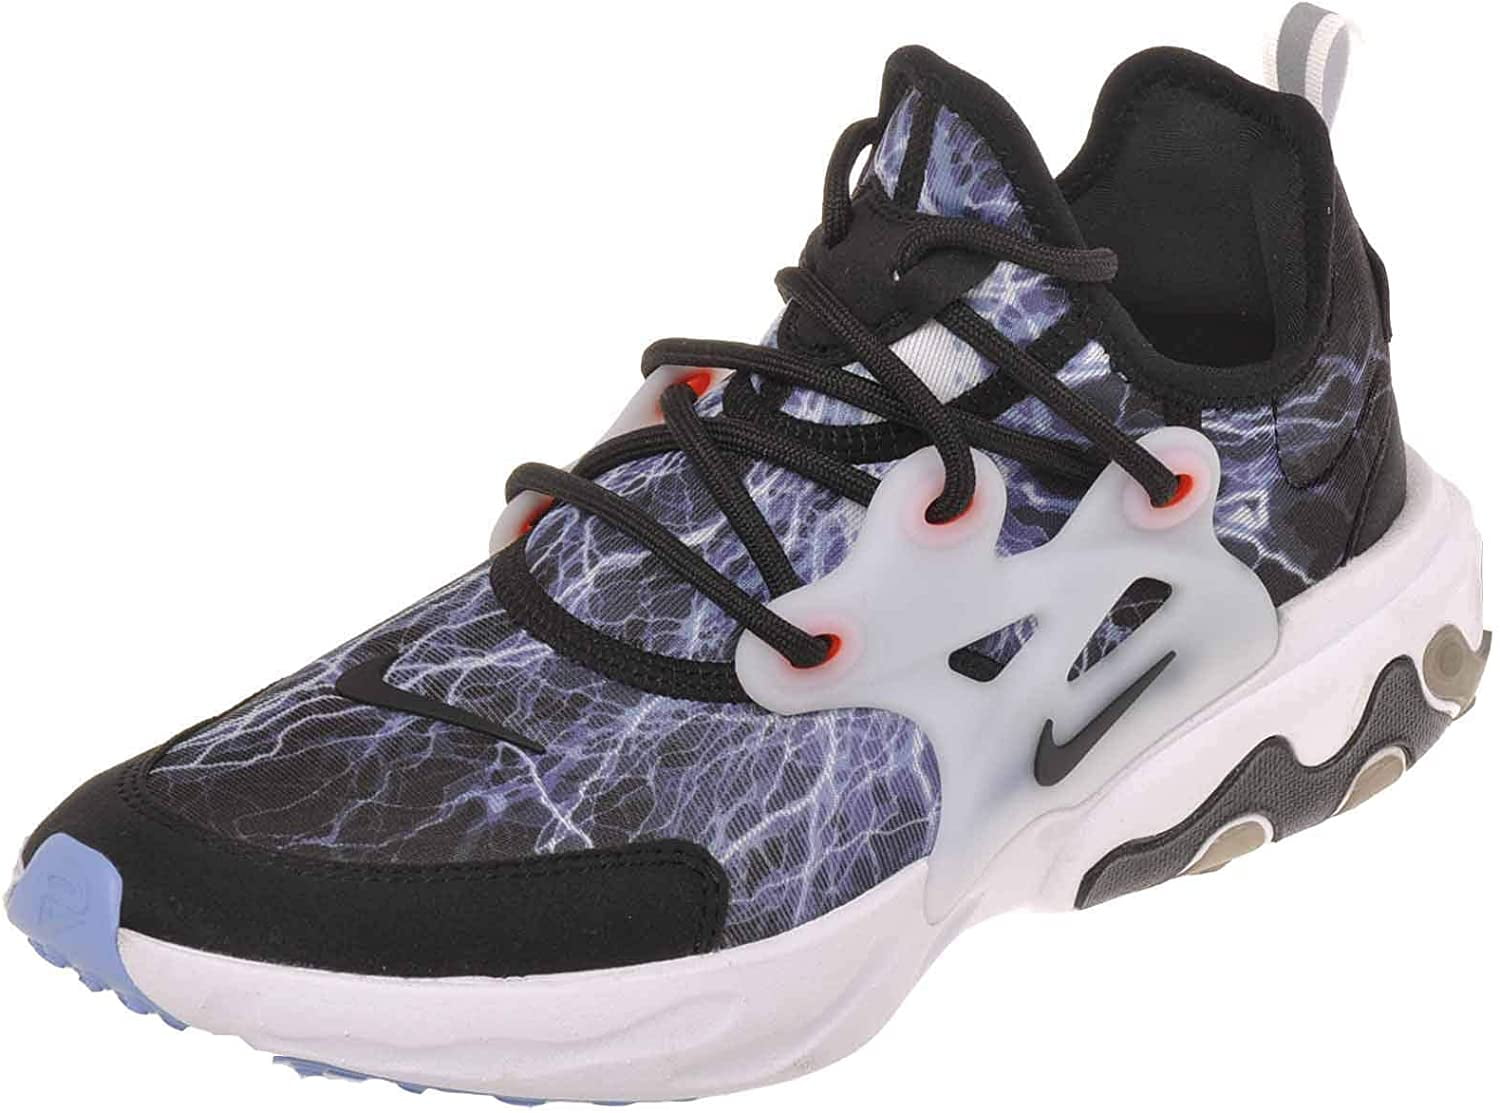 Nike React Presto Shoes Size 7, Color: Black/White/Blue - Walmart.com